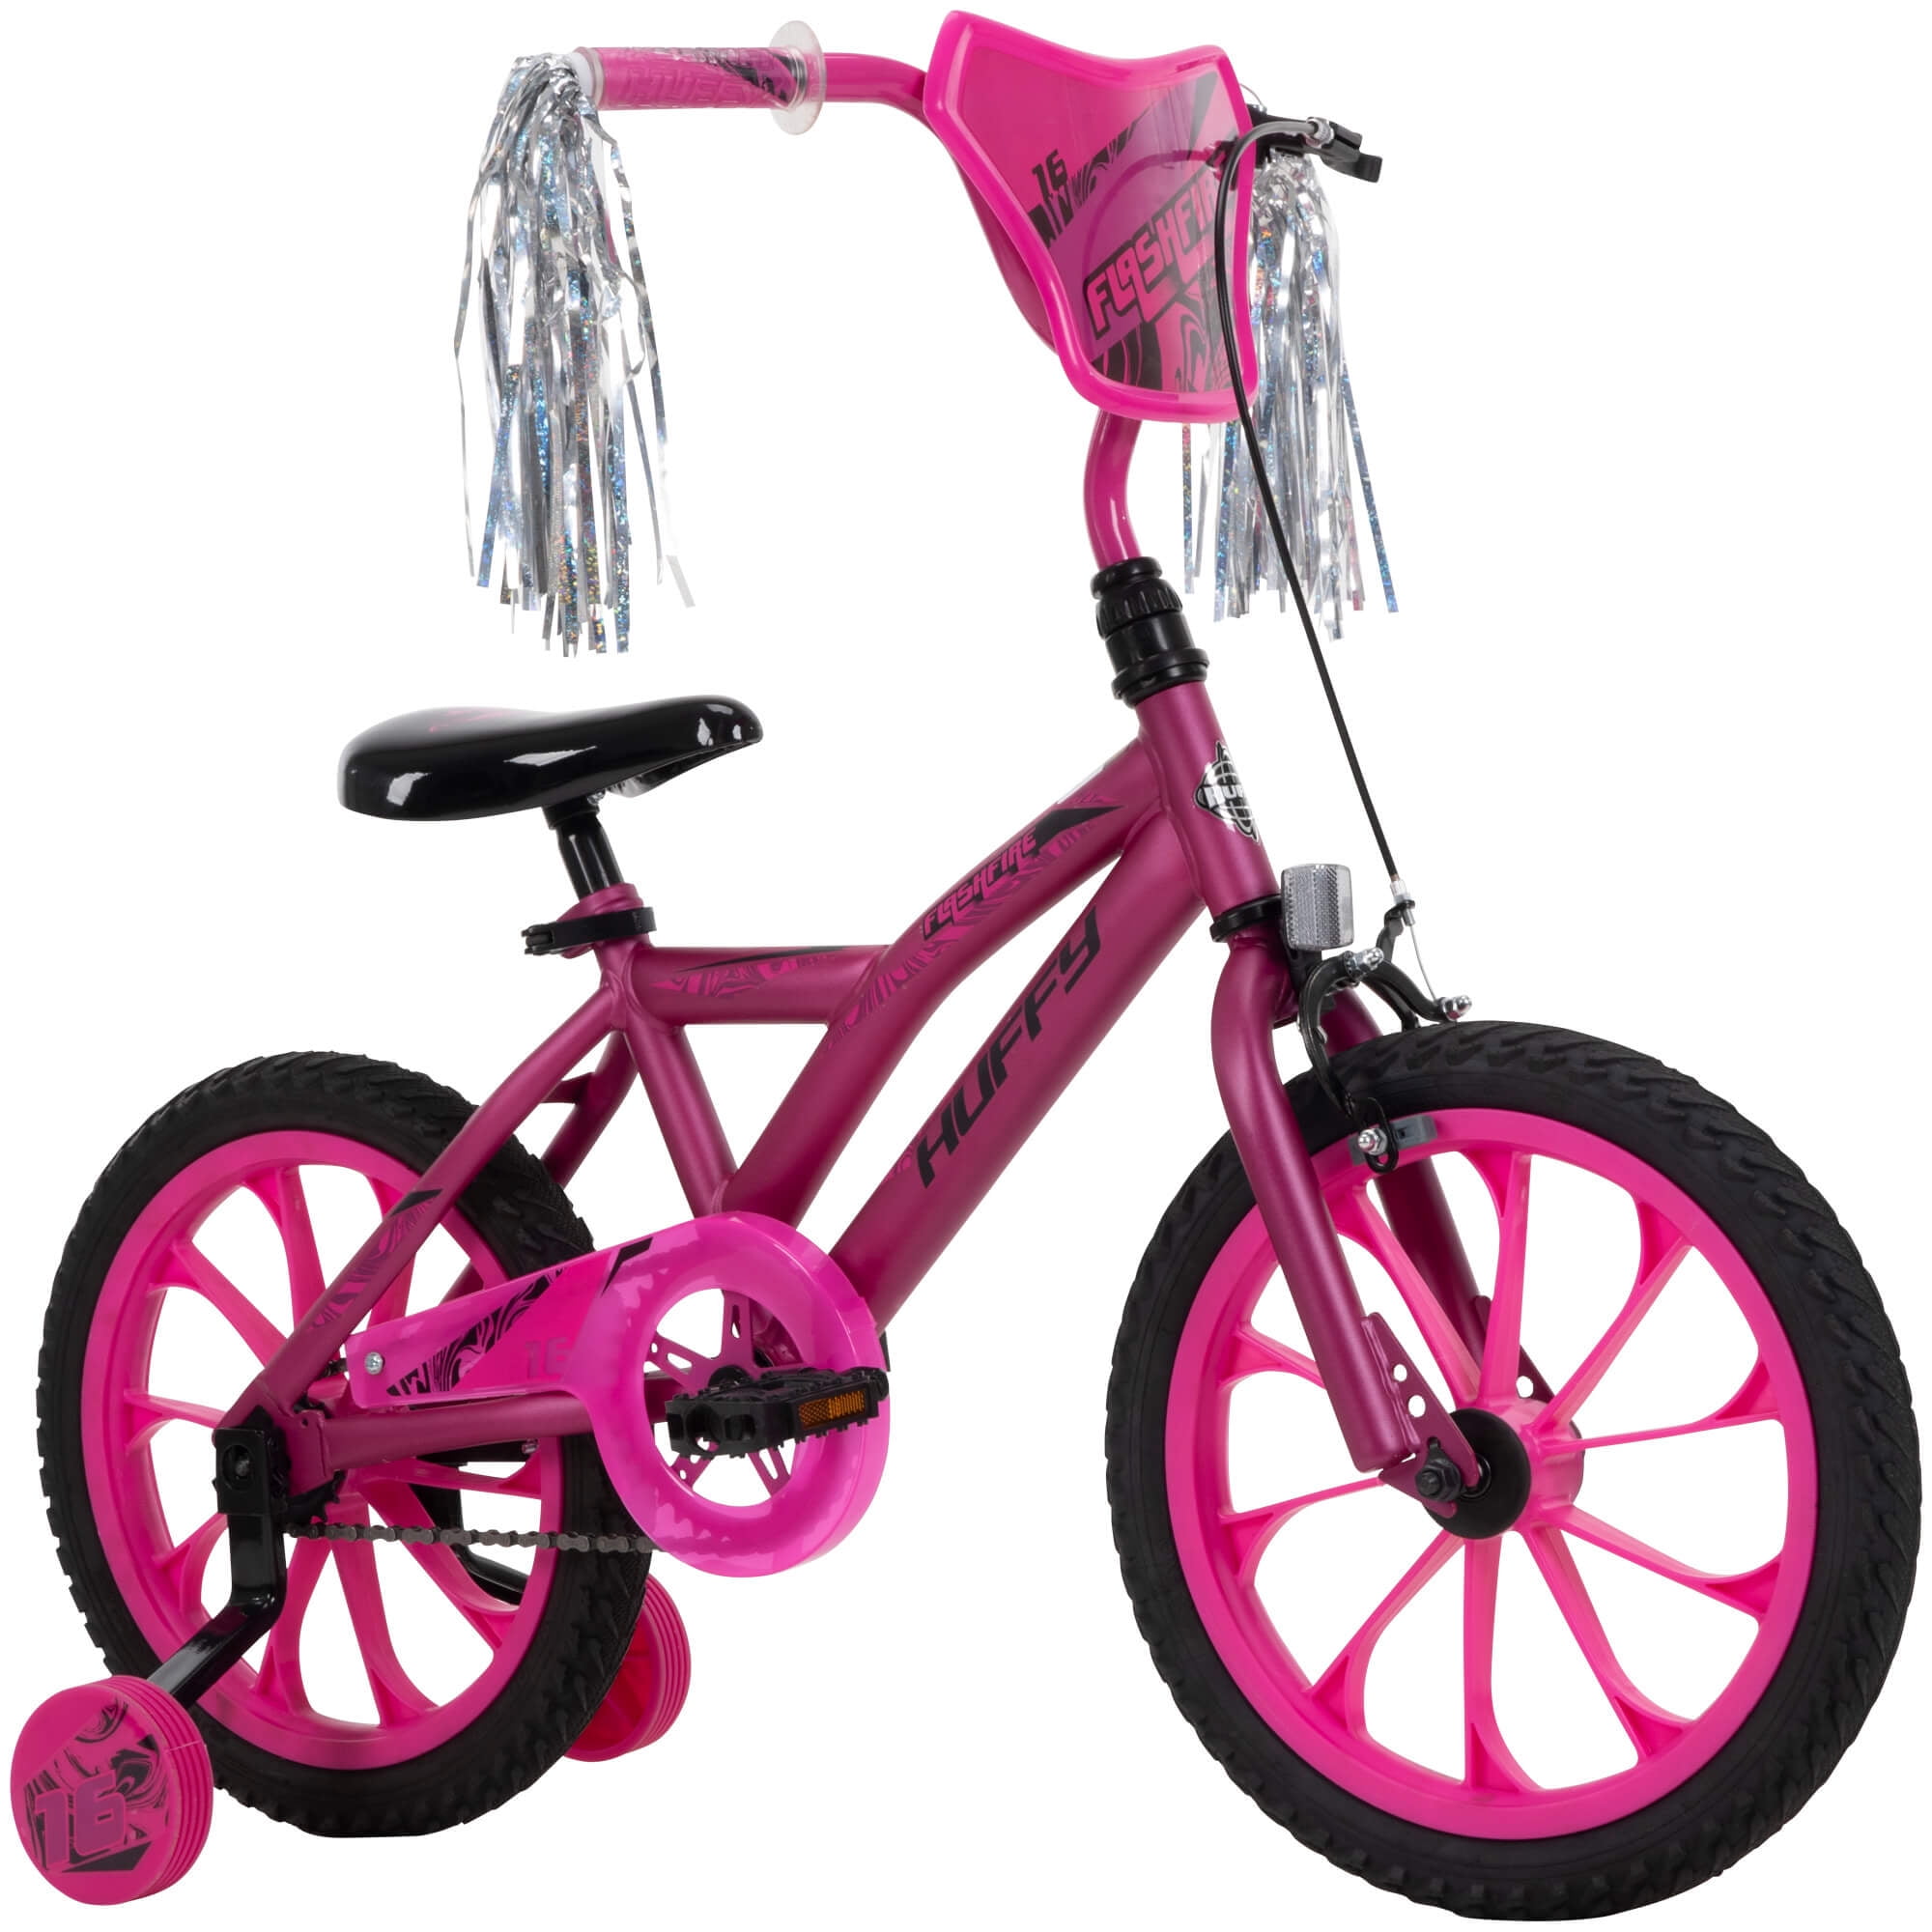 Girl's Kids Bike Pink and Purple 